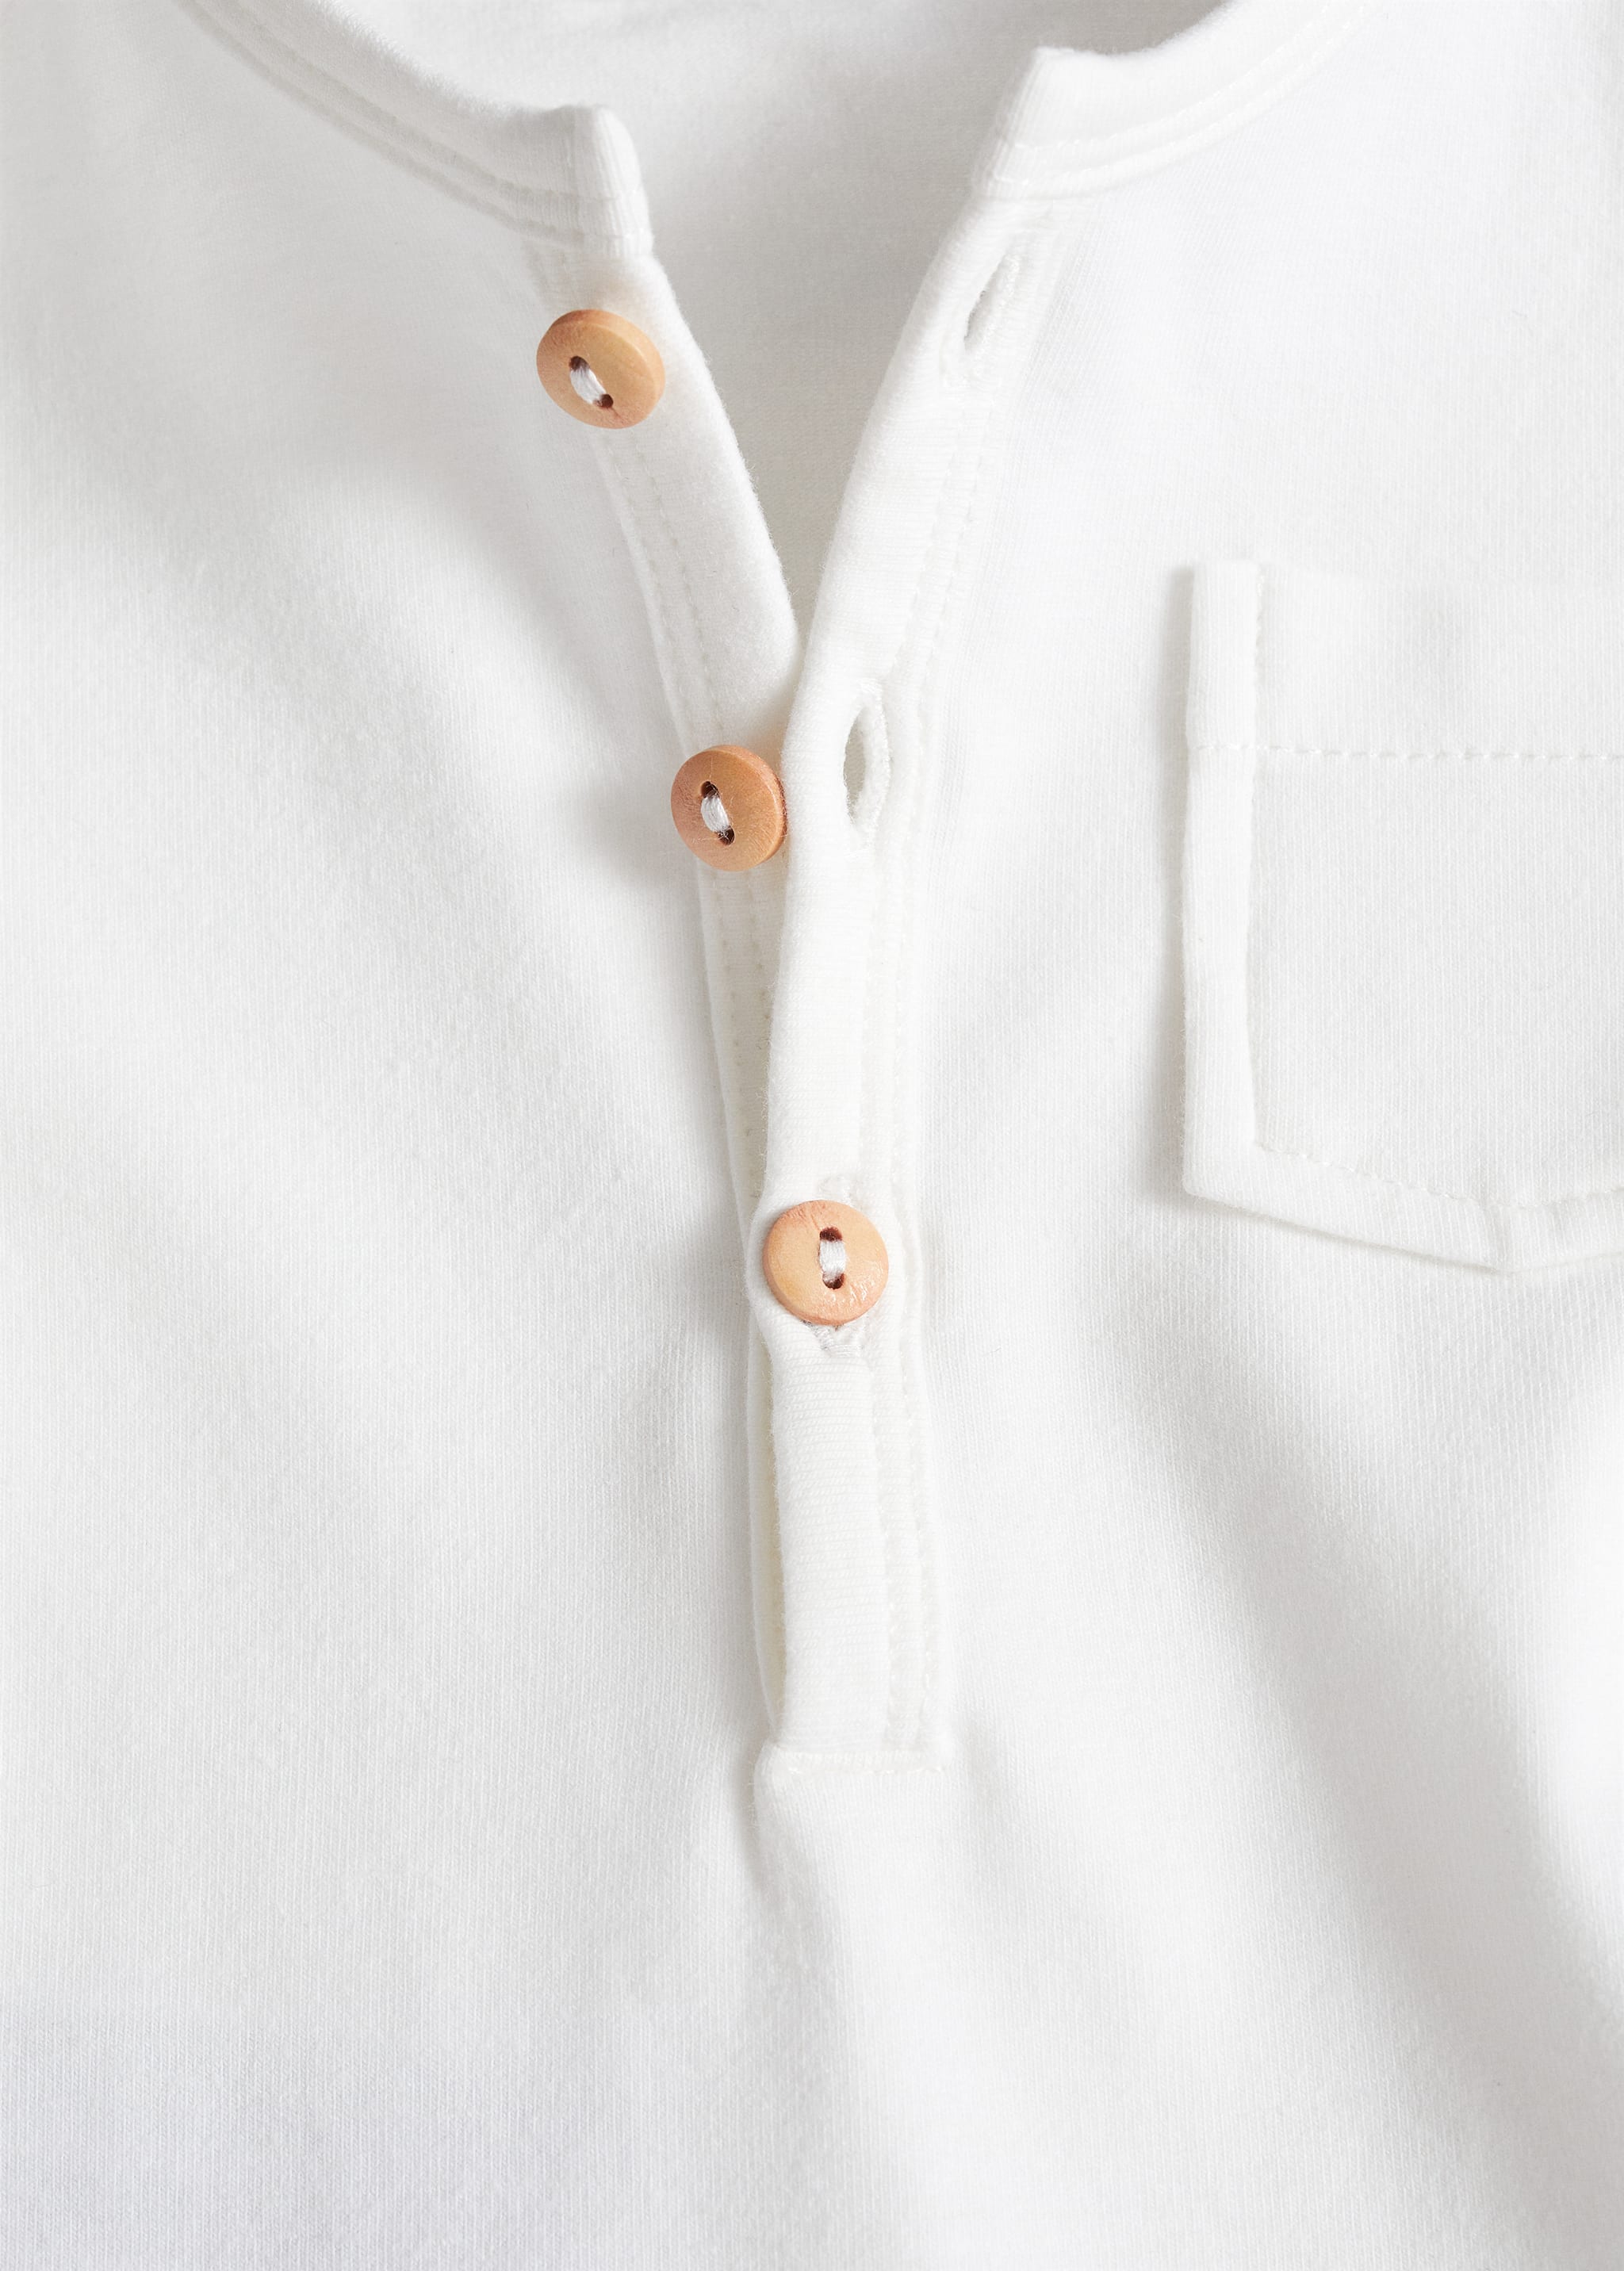 Cotton bodysuit buttons - Details of the article 0